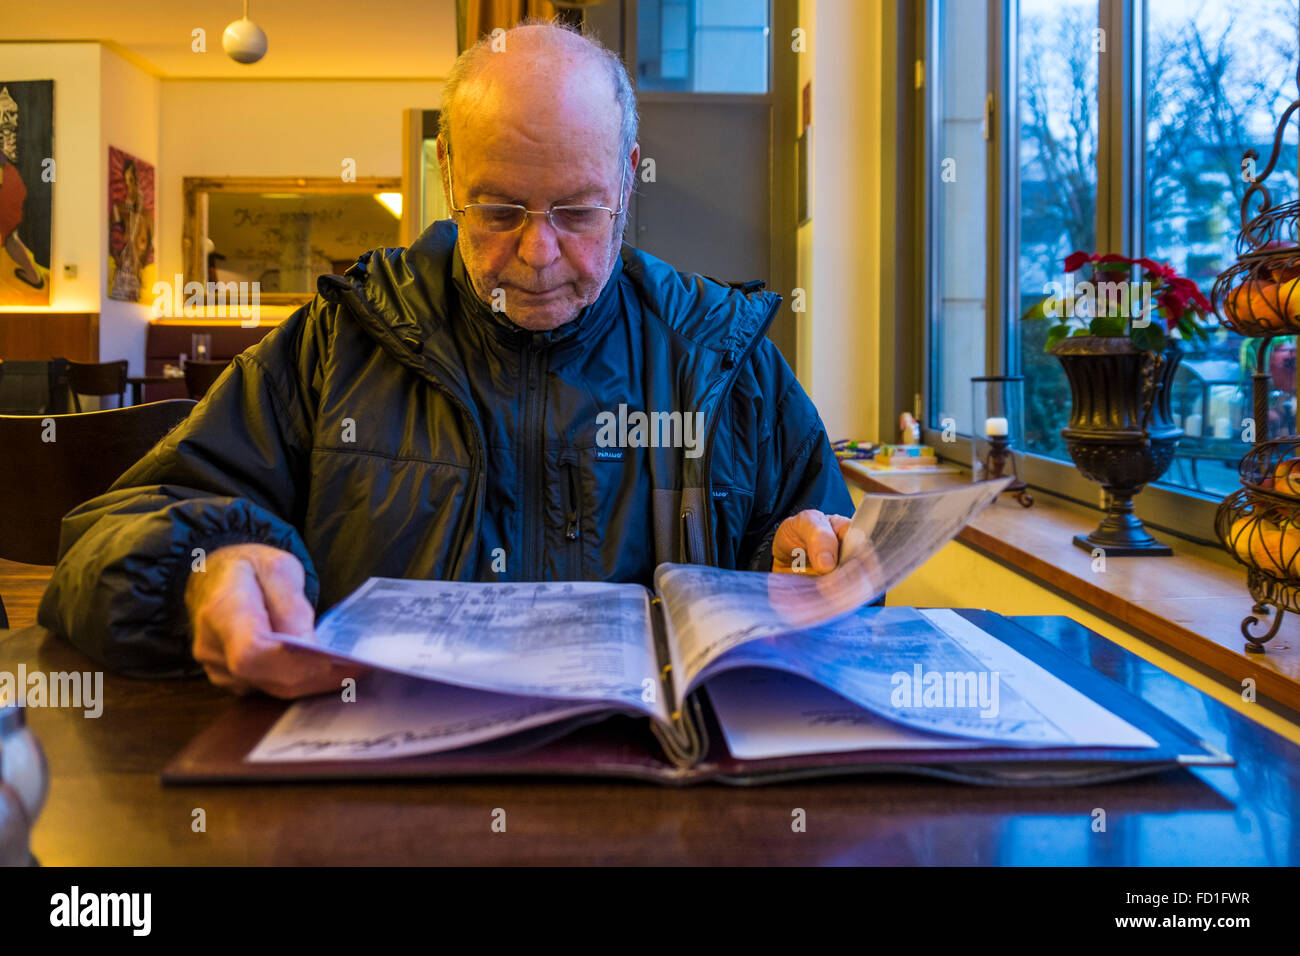 Berlin Zum Schwarzen Ferkel restaurant and bar interior and elderly man reading a menu Stock Photo